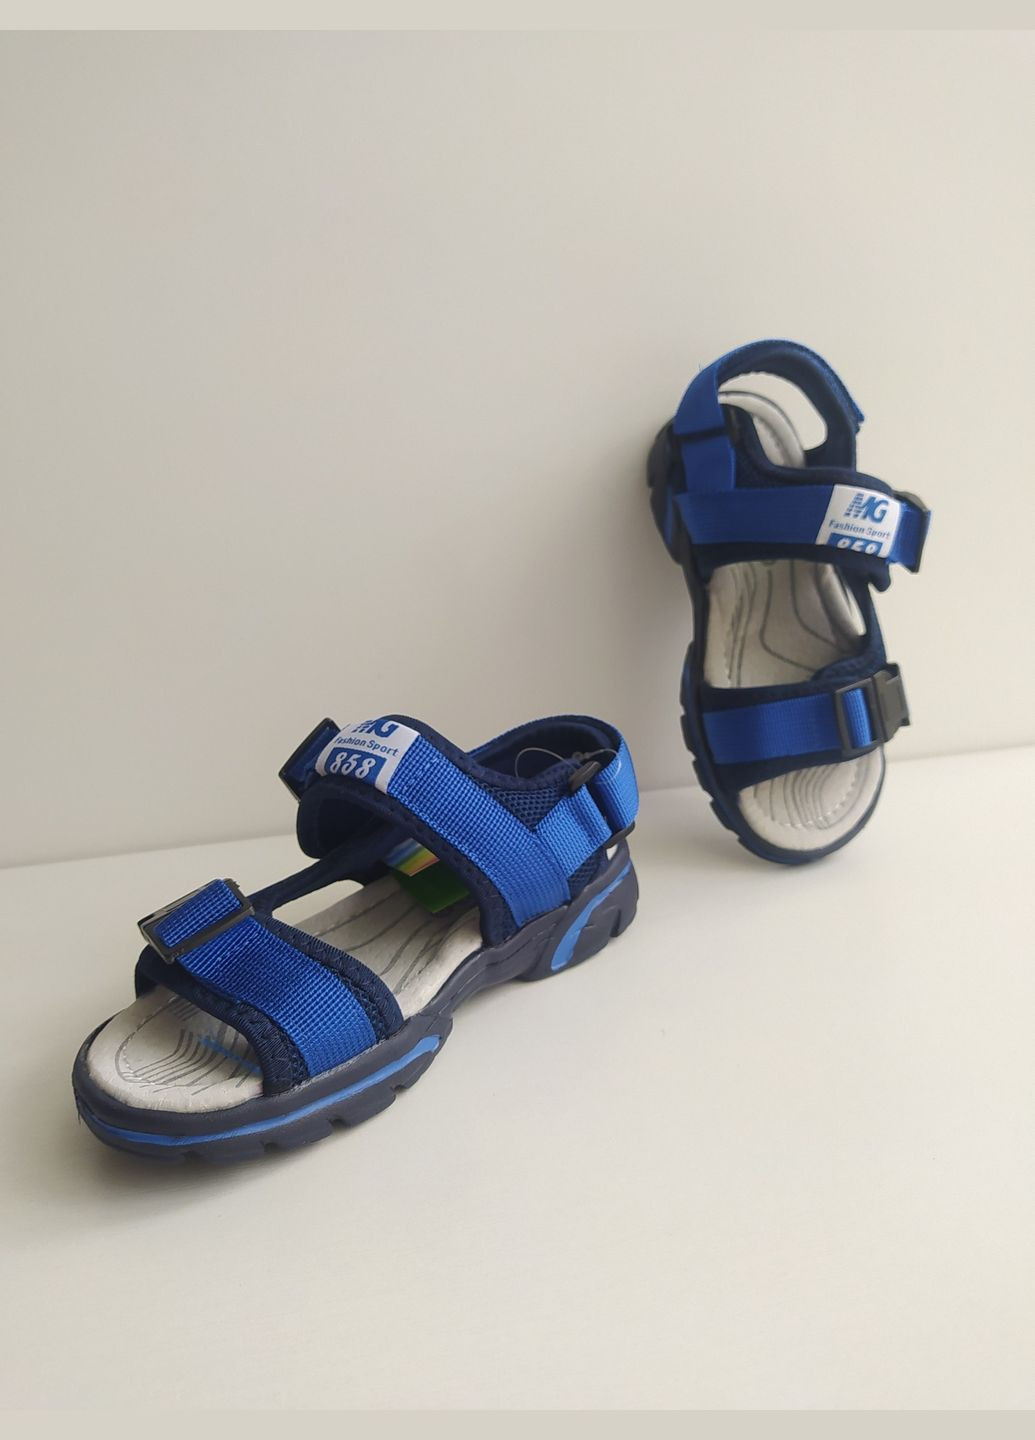 Синие детские сандалии 28 г 18,3 см синий артикул б181 Kimbo-O